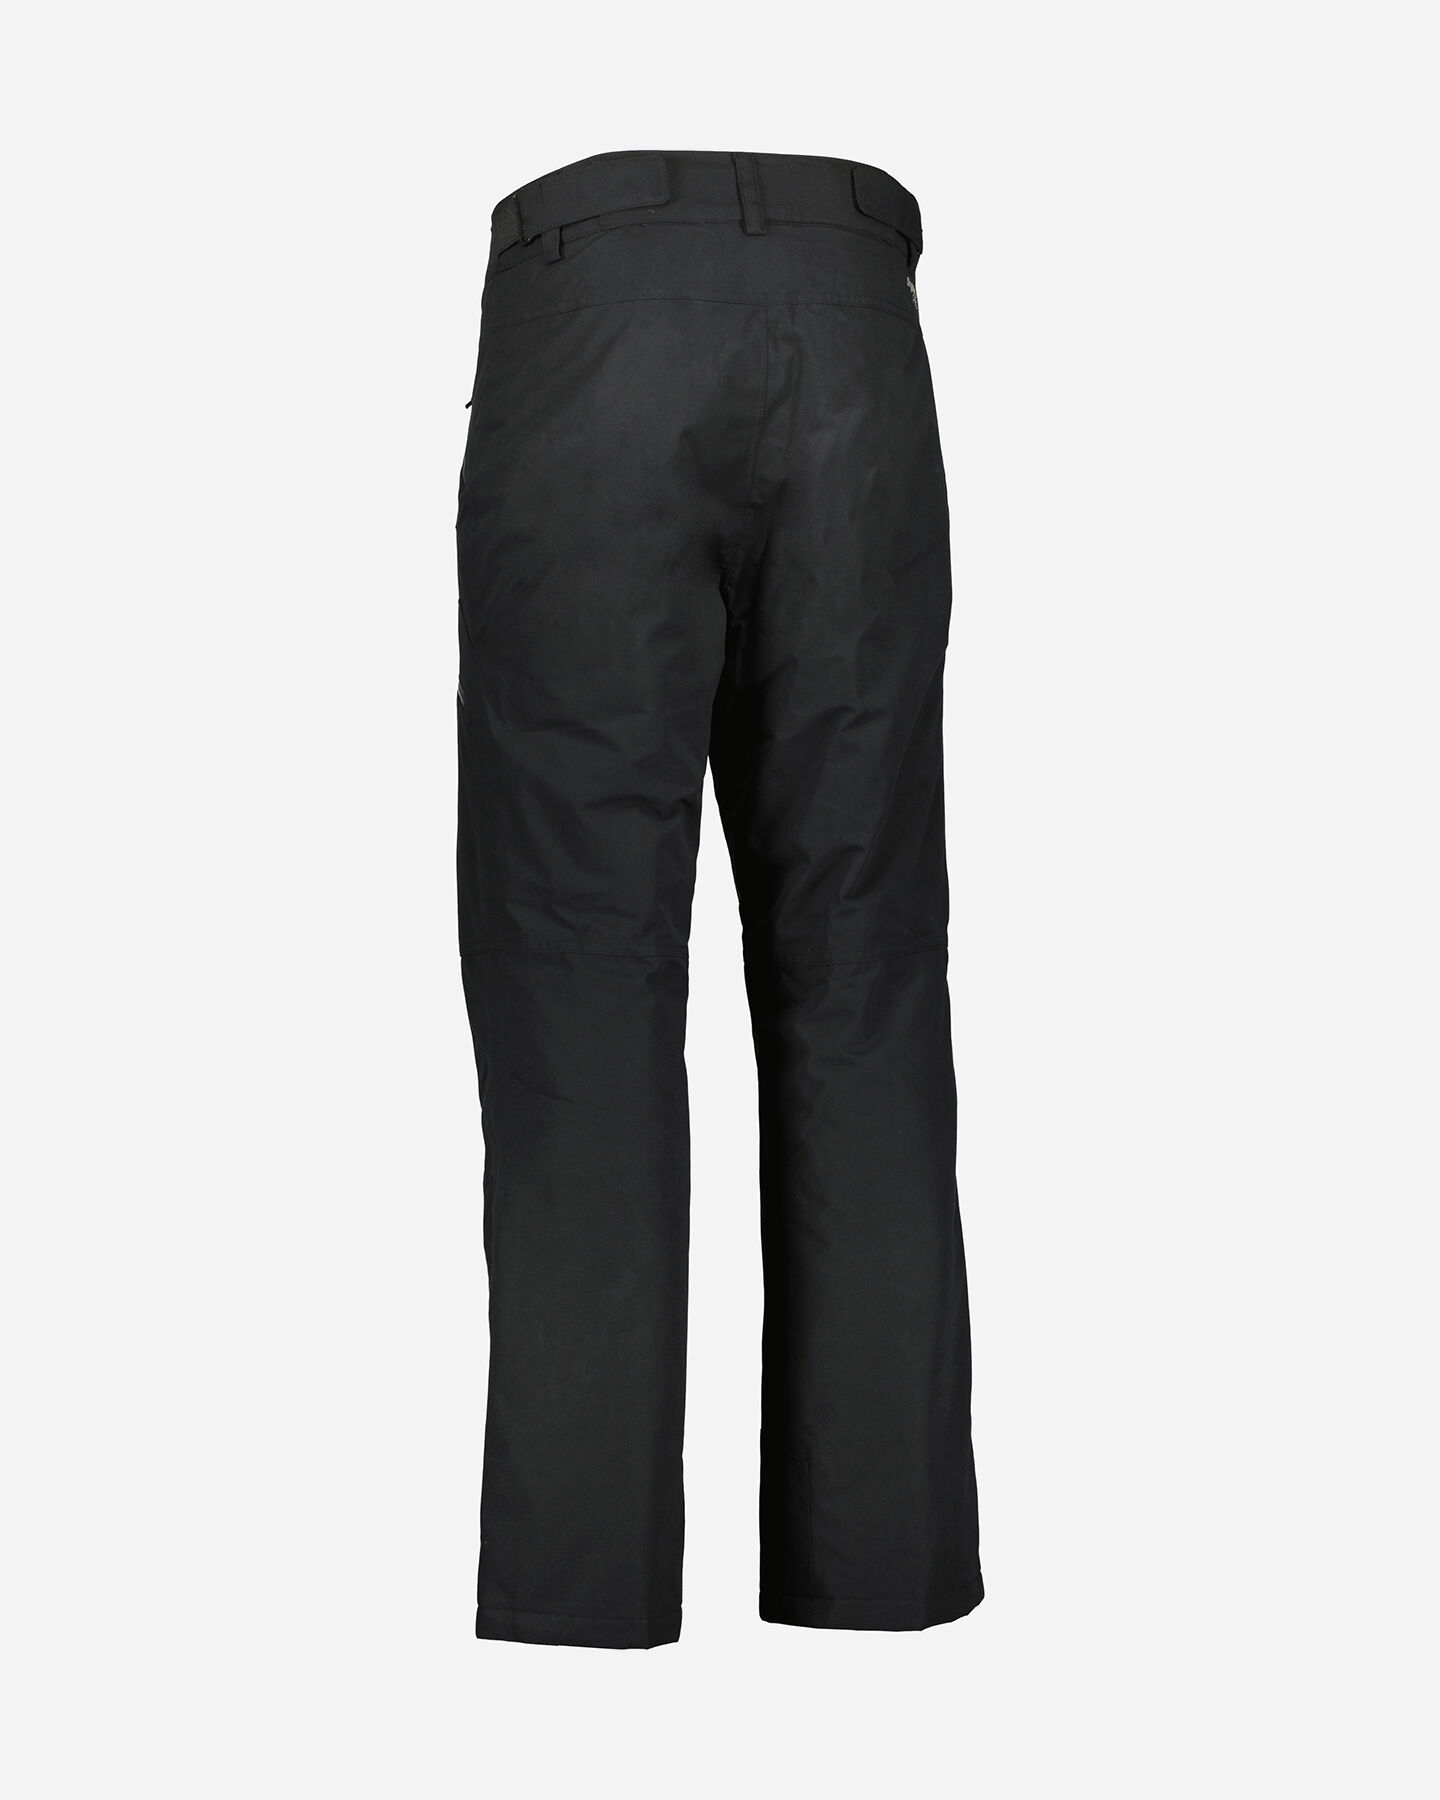  Pantalone sci BEAR SKI M S4127390|050|XS scatto 3